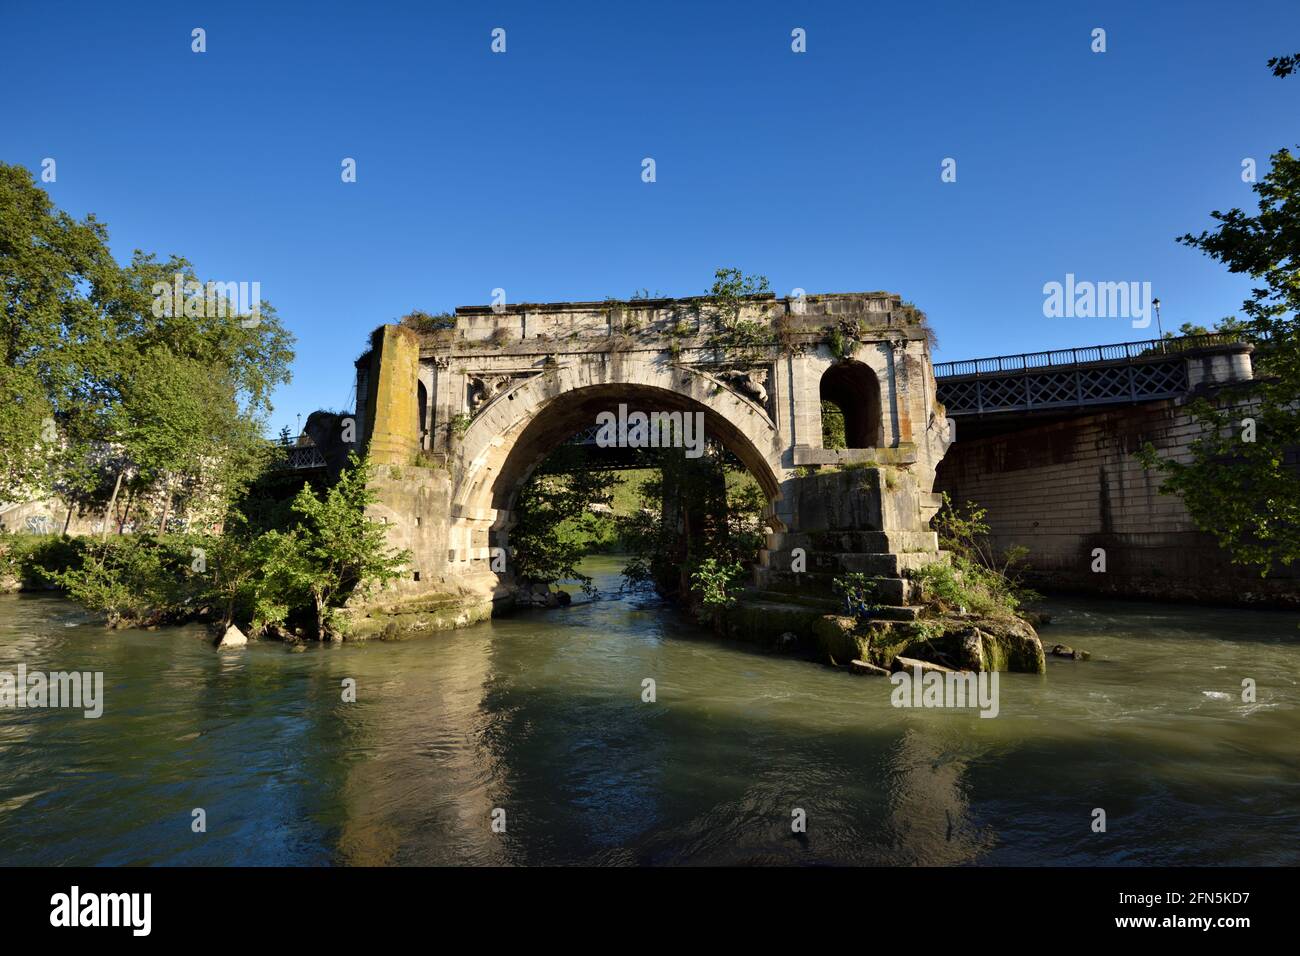 Italia, Roma, río Tíber, ponte rotto (puente roto), Pons aemilius, antiguo puente romano Foto de stock